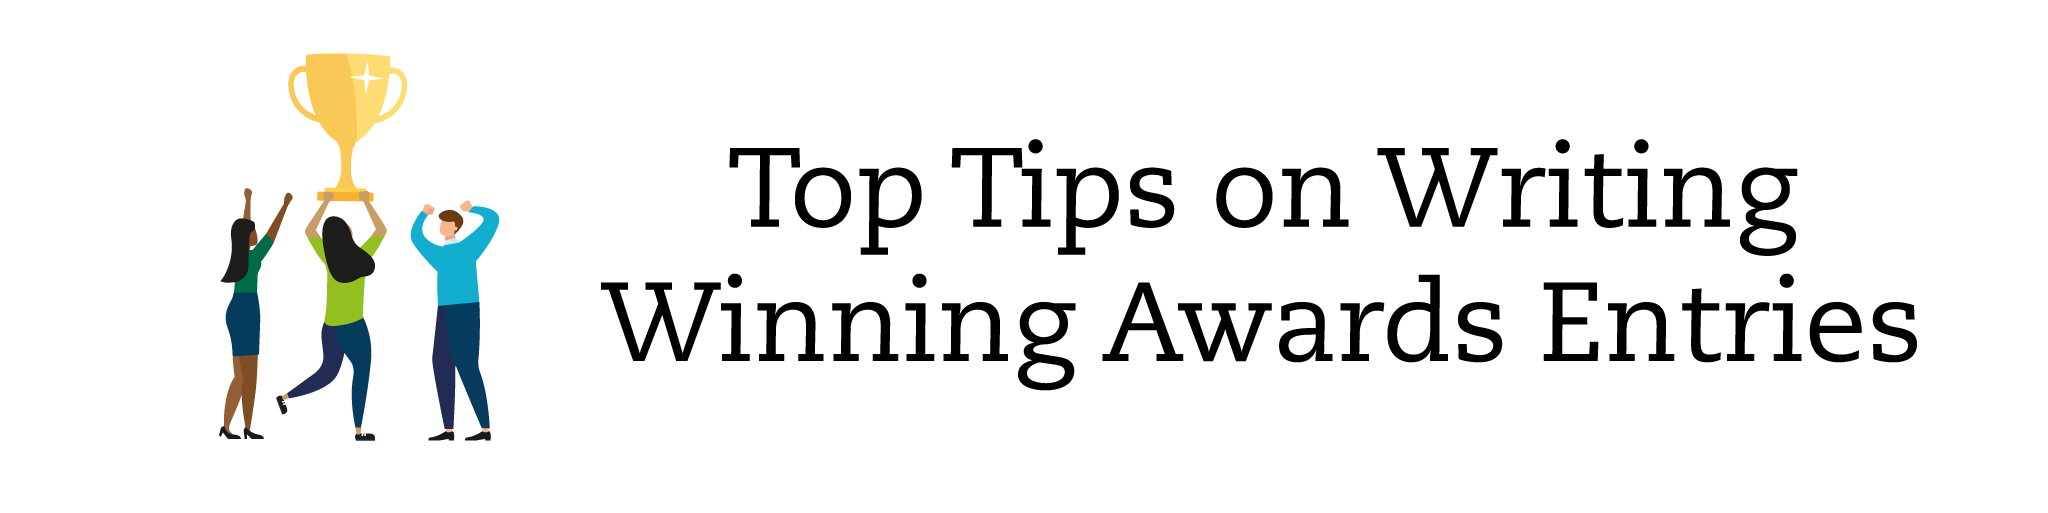 Top Tips Awards Entries Website Banner